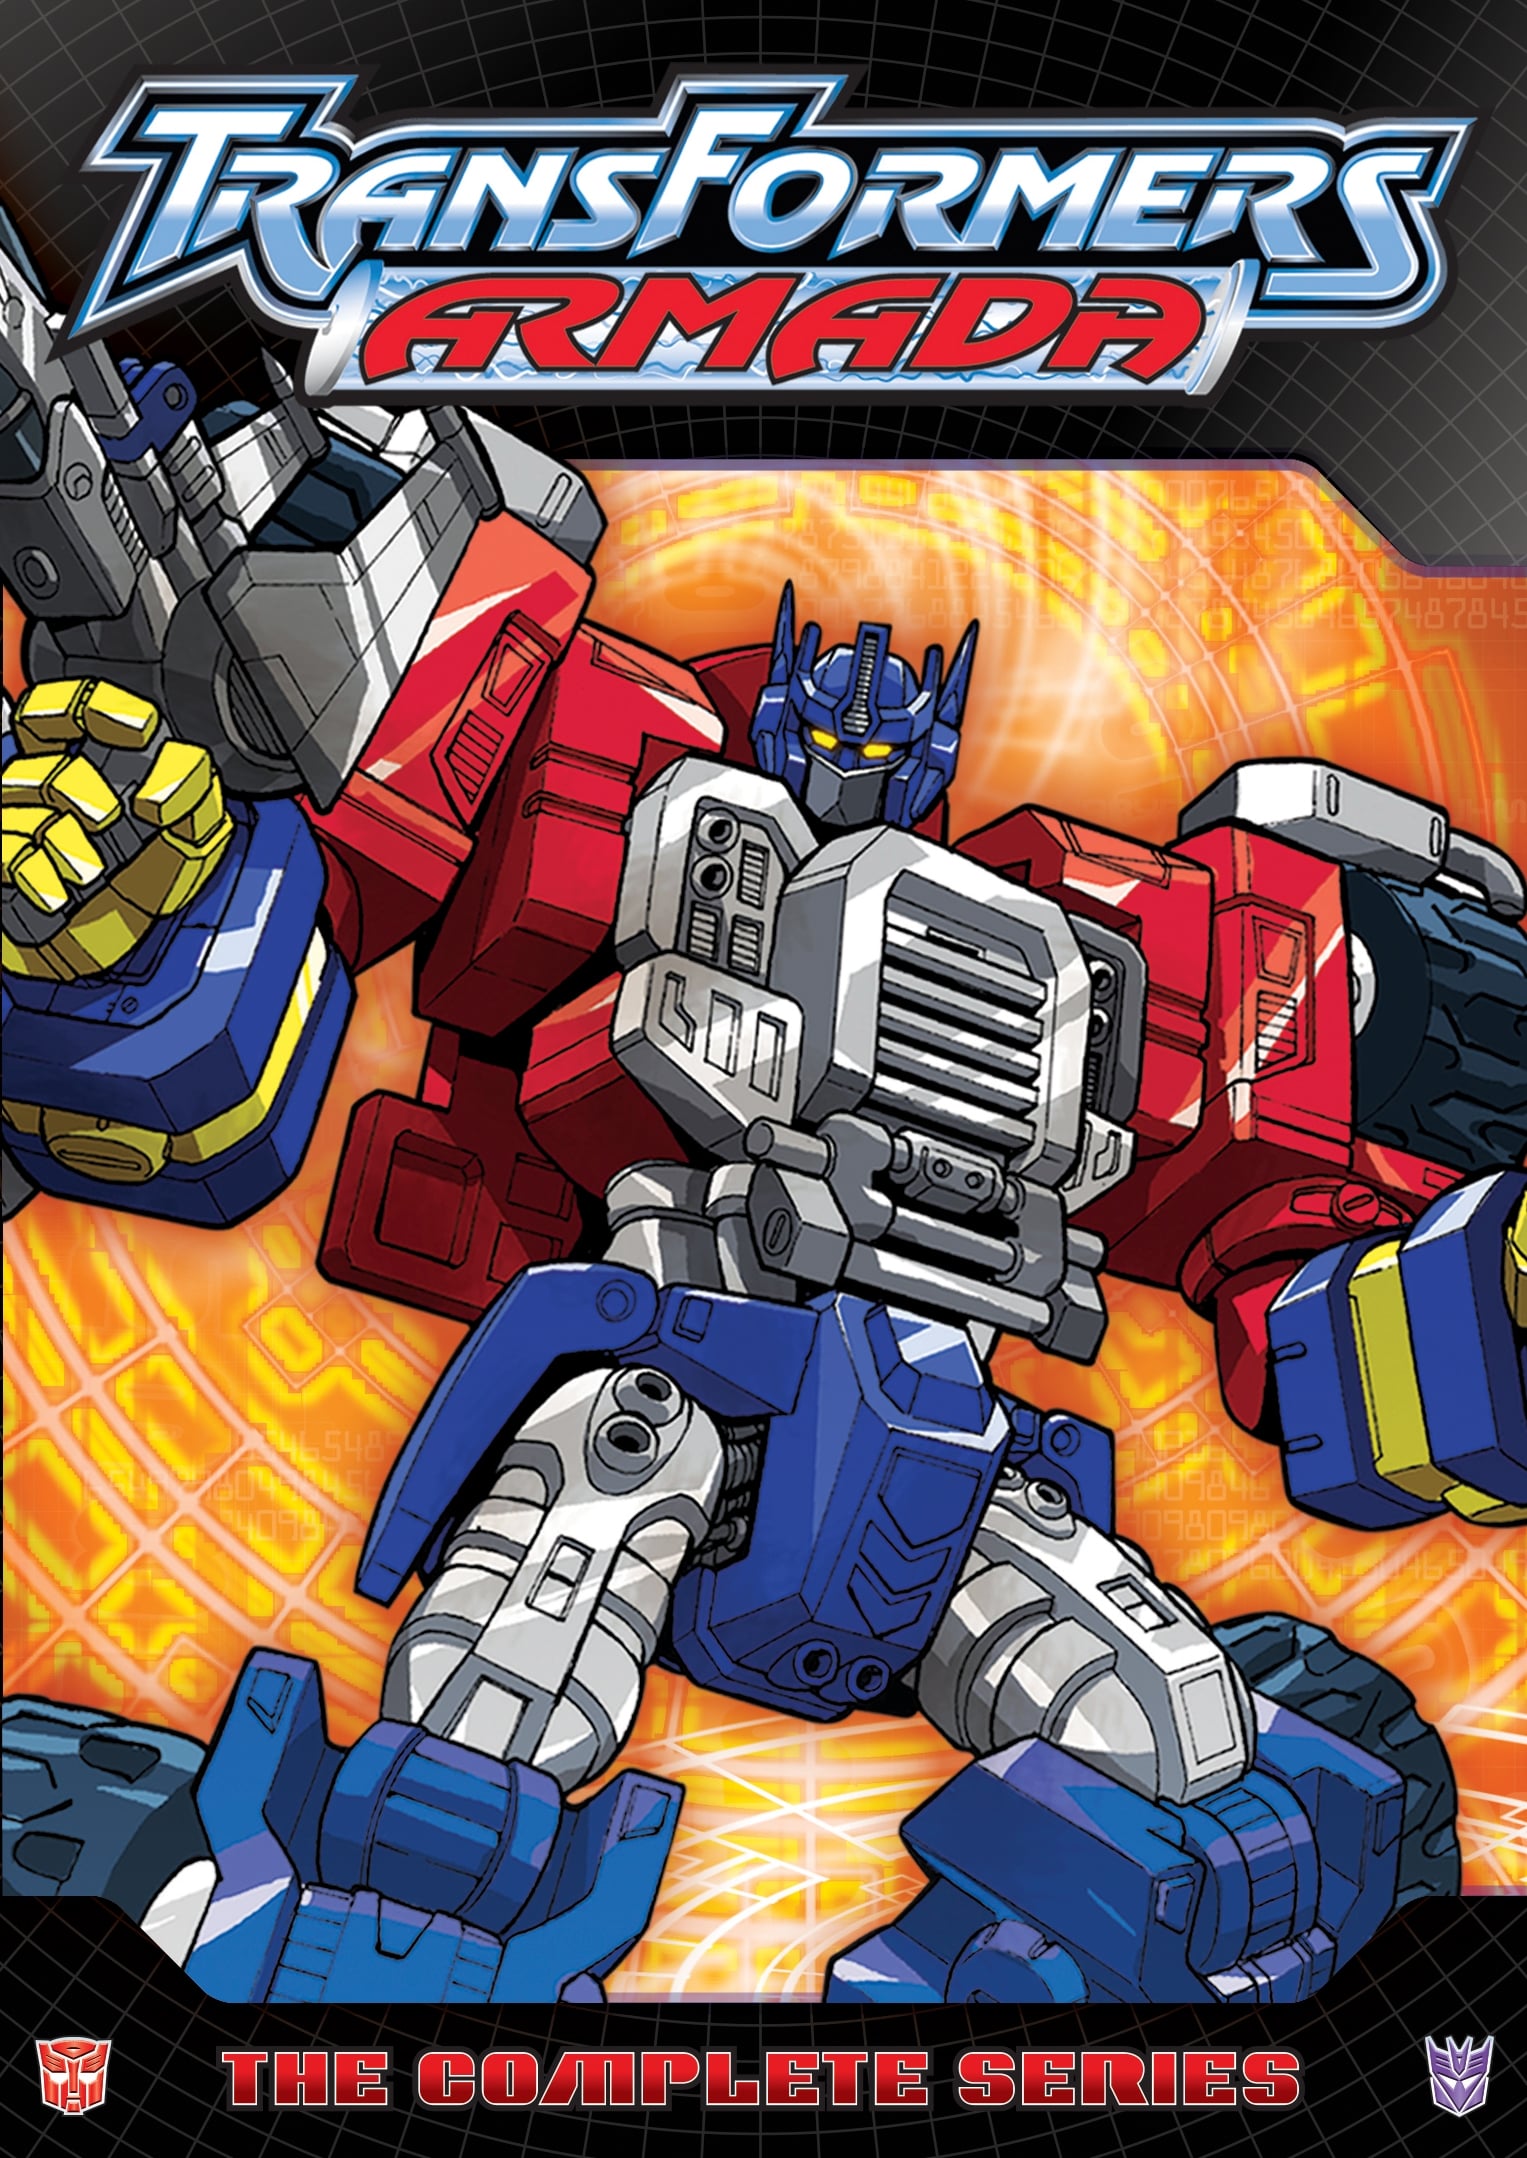 Transformers: Armada (2002)